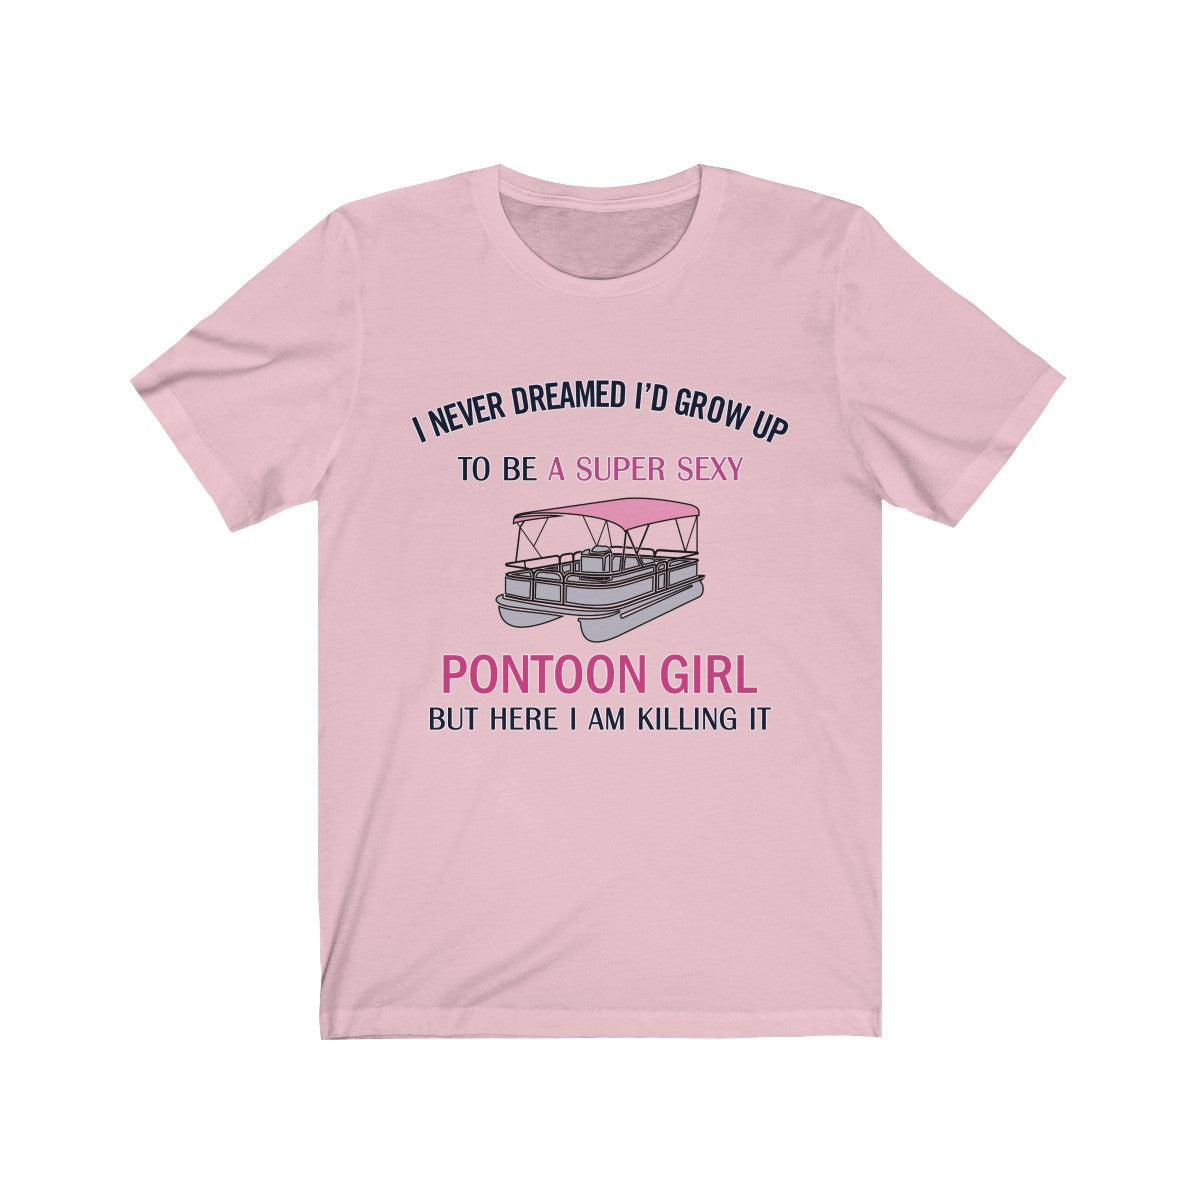 I am a Super Sexy Pontoon Girl T Shirt